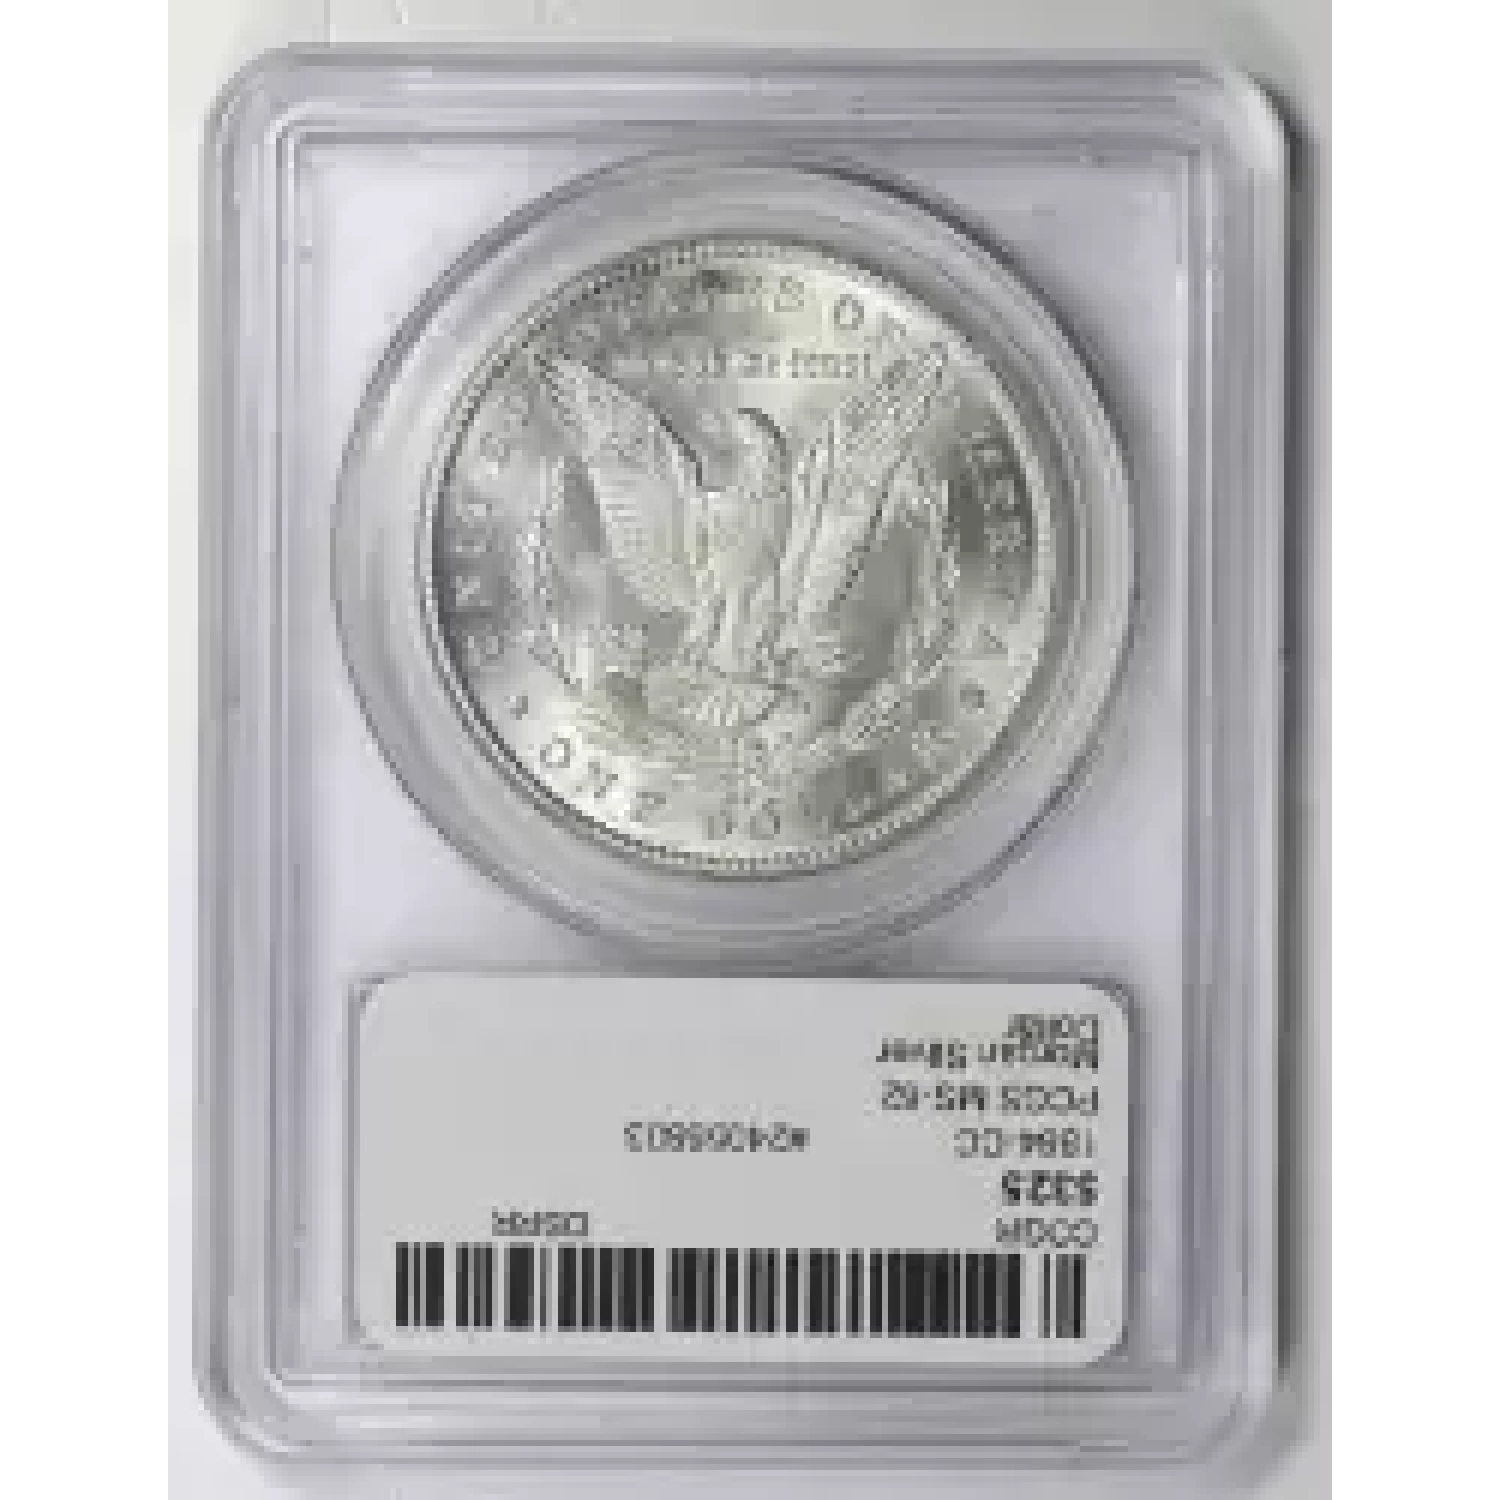 1884-CC $1 (2)